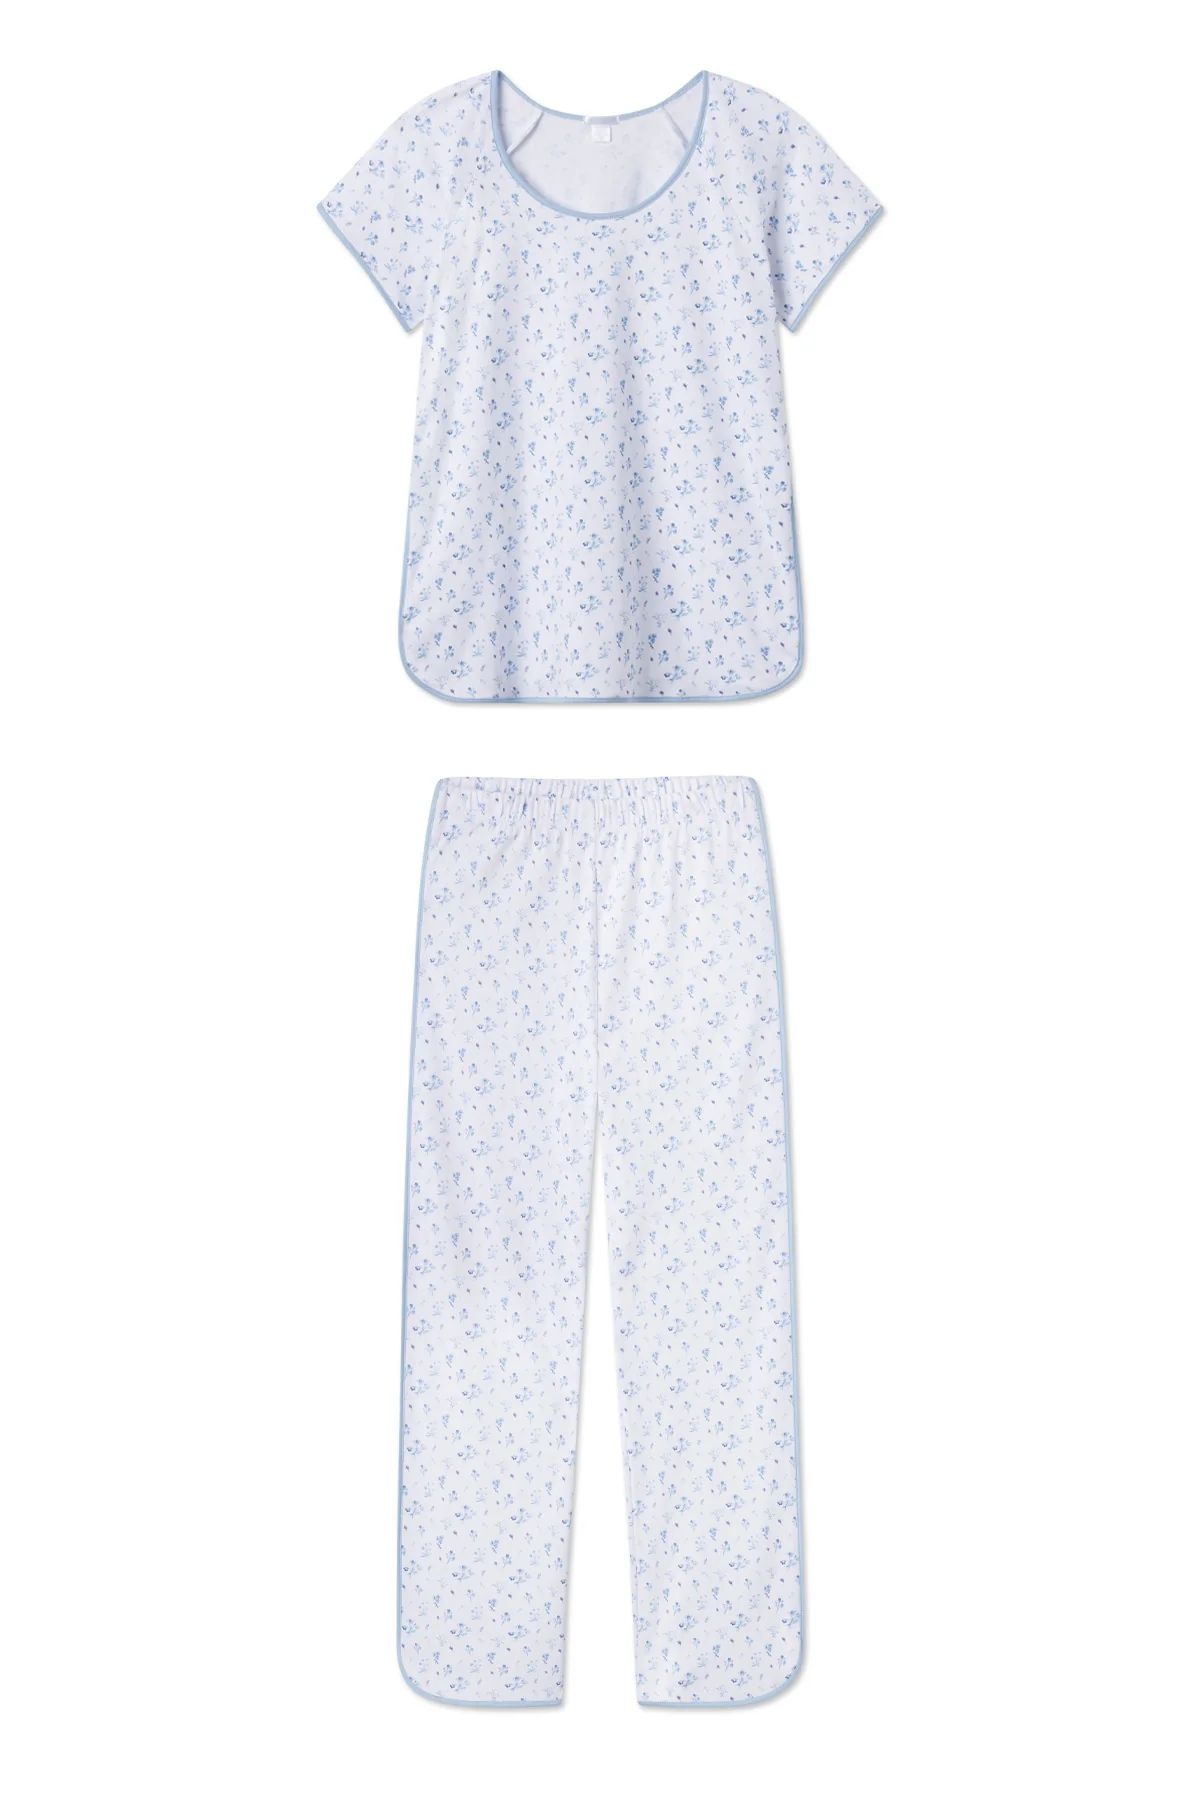 Pima Short-Long Set in French Blue Floral | Lake Pajamas